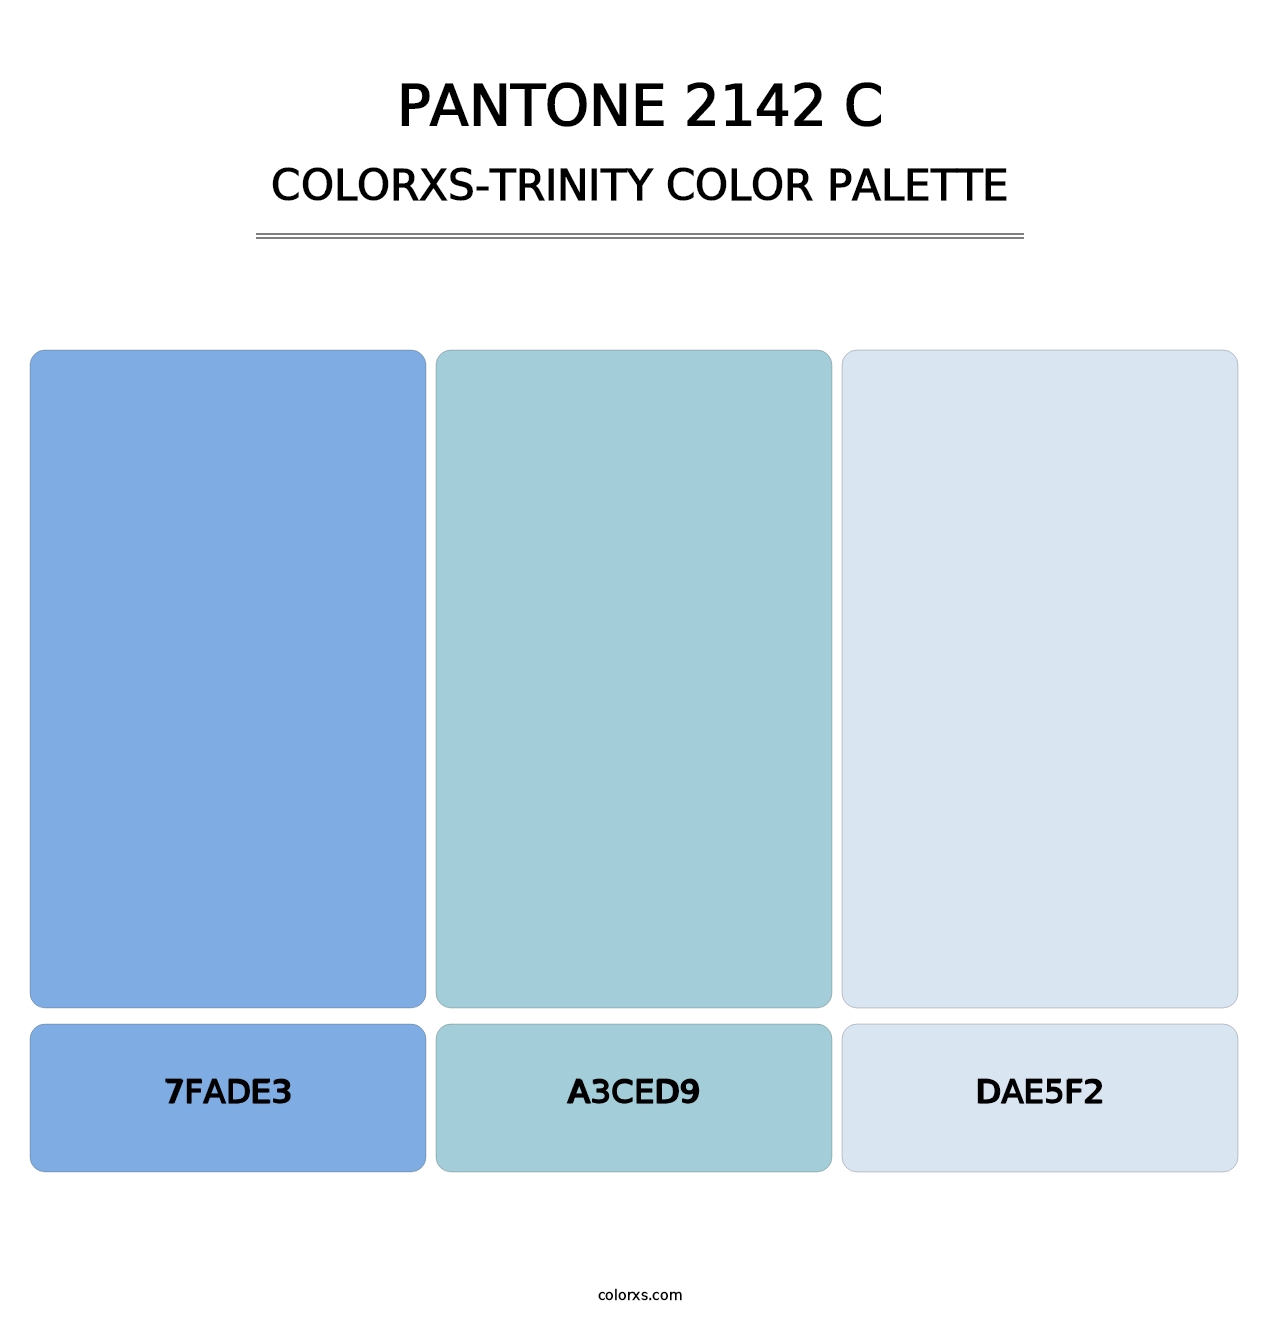 PANTONE 2142 C - Colorxs Trinity Palette